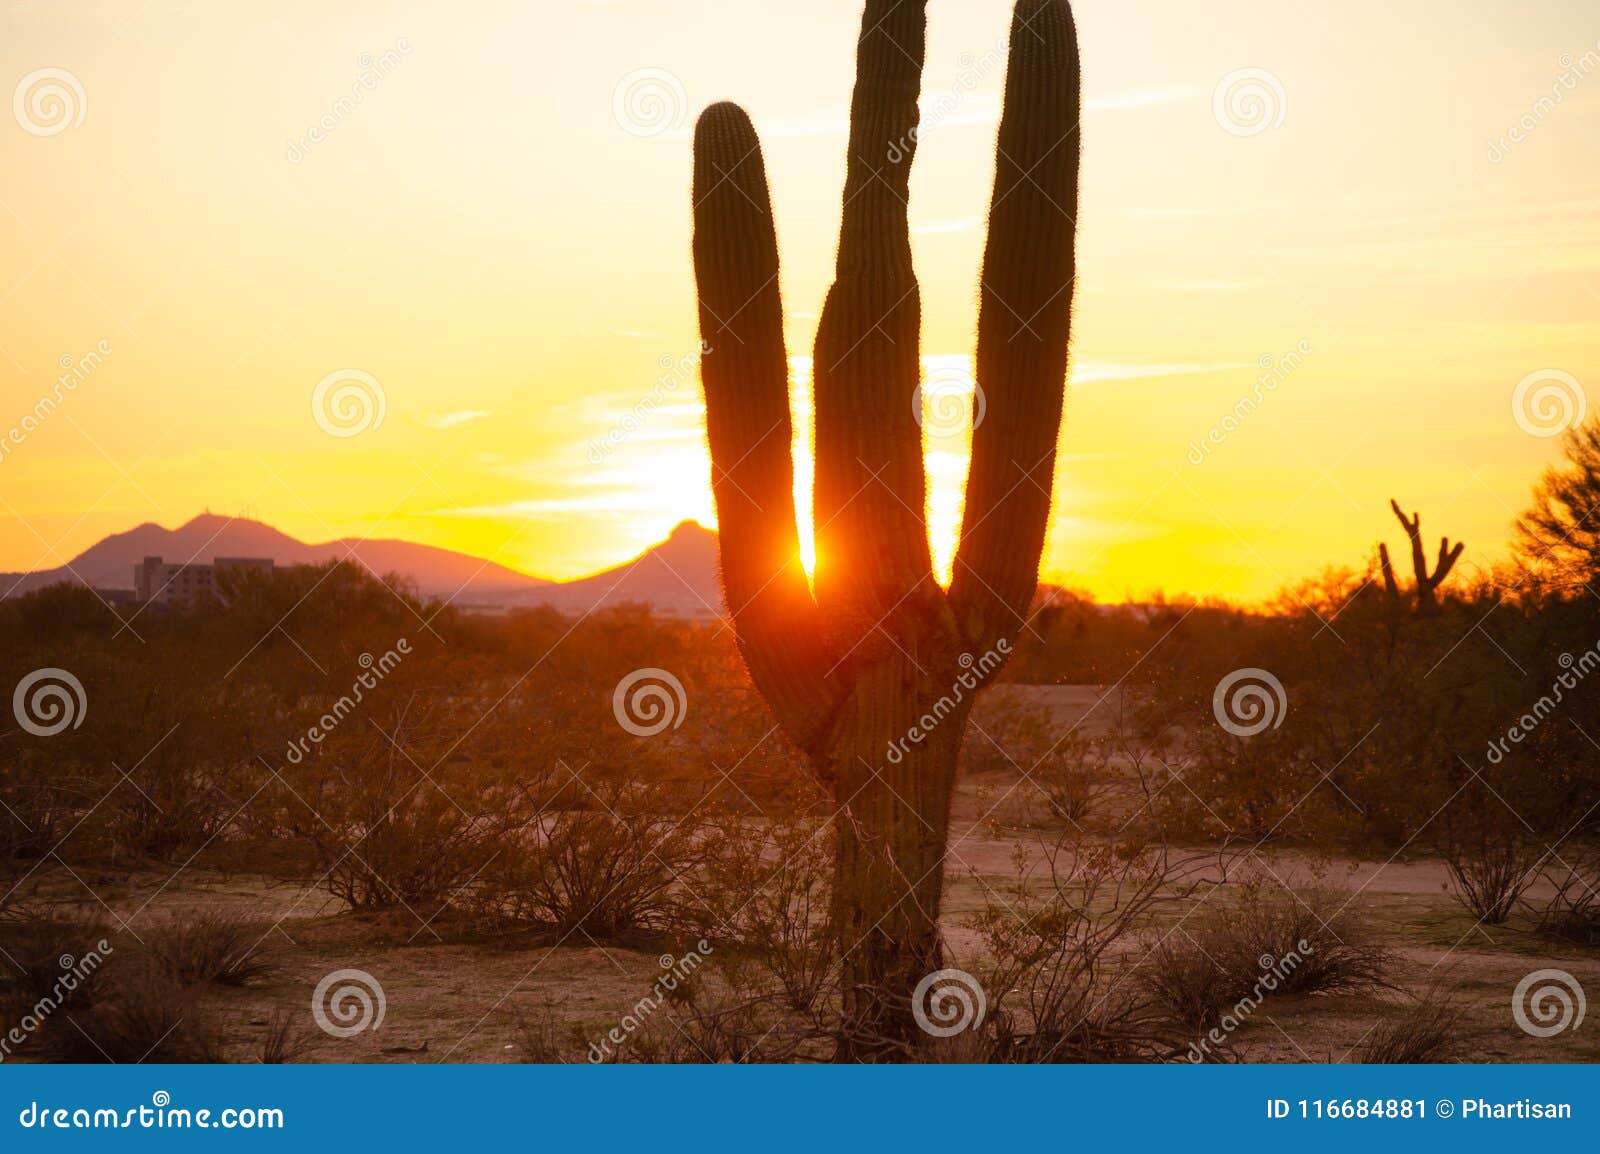 Beautiful Desert Sunset Landscape Stock Image - Image of beautiful ...